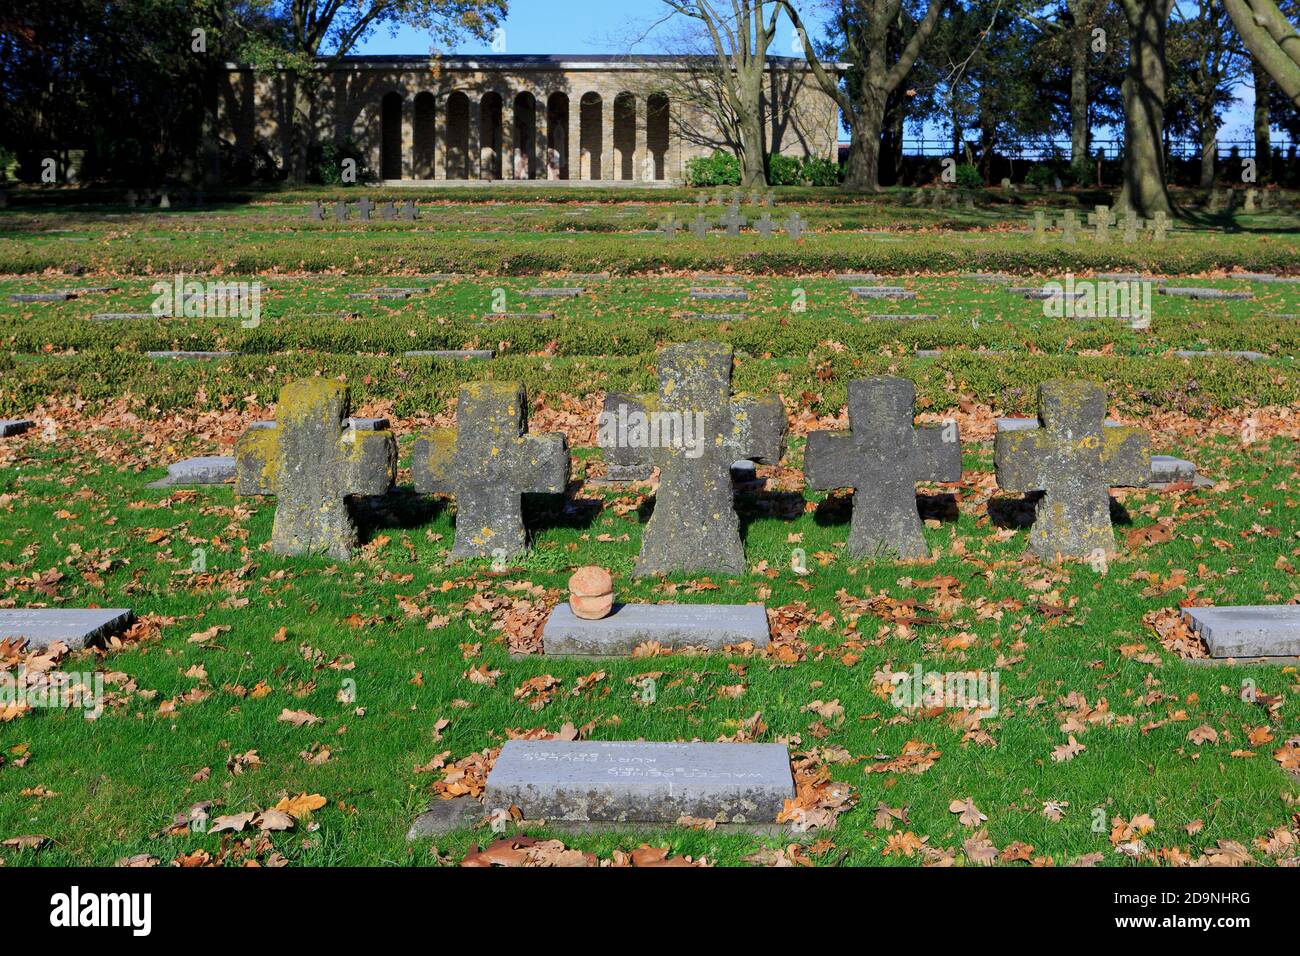 The memorial hall with stone crosses and World War I graves at Hooglede German war cemetery in Hooglede, Belgium Stock Photo